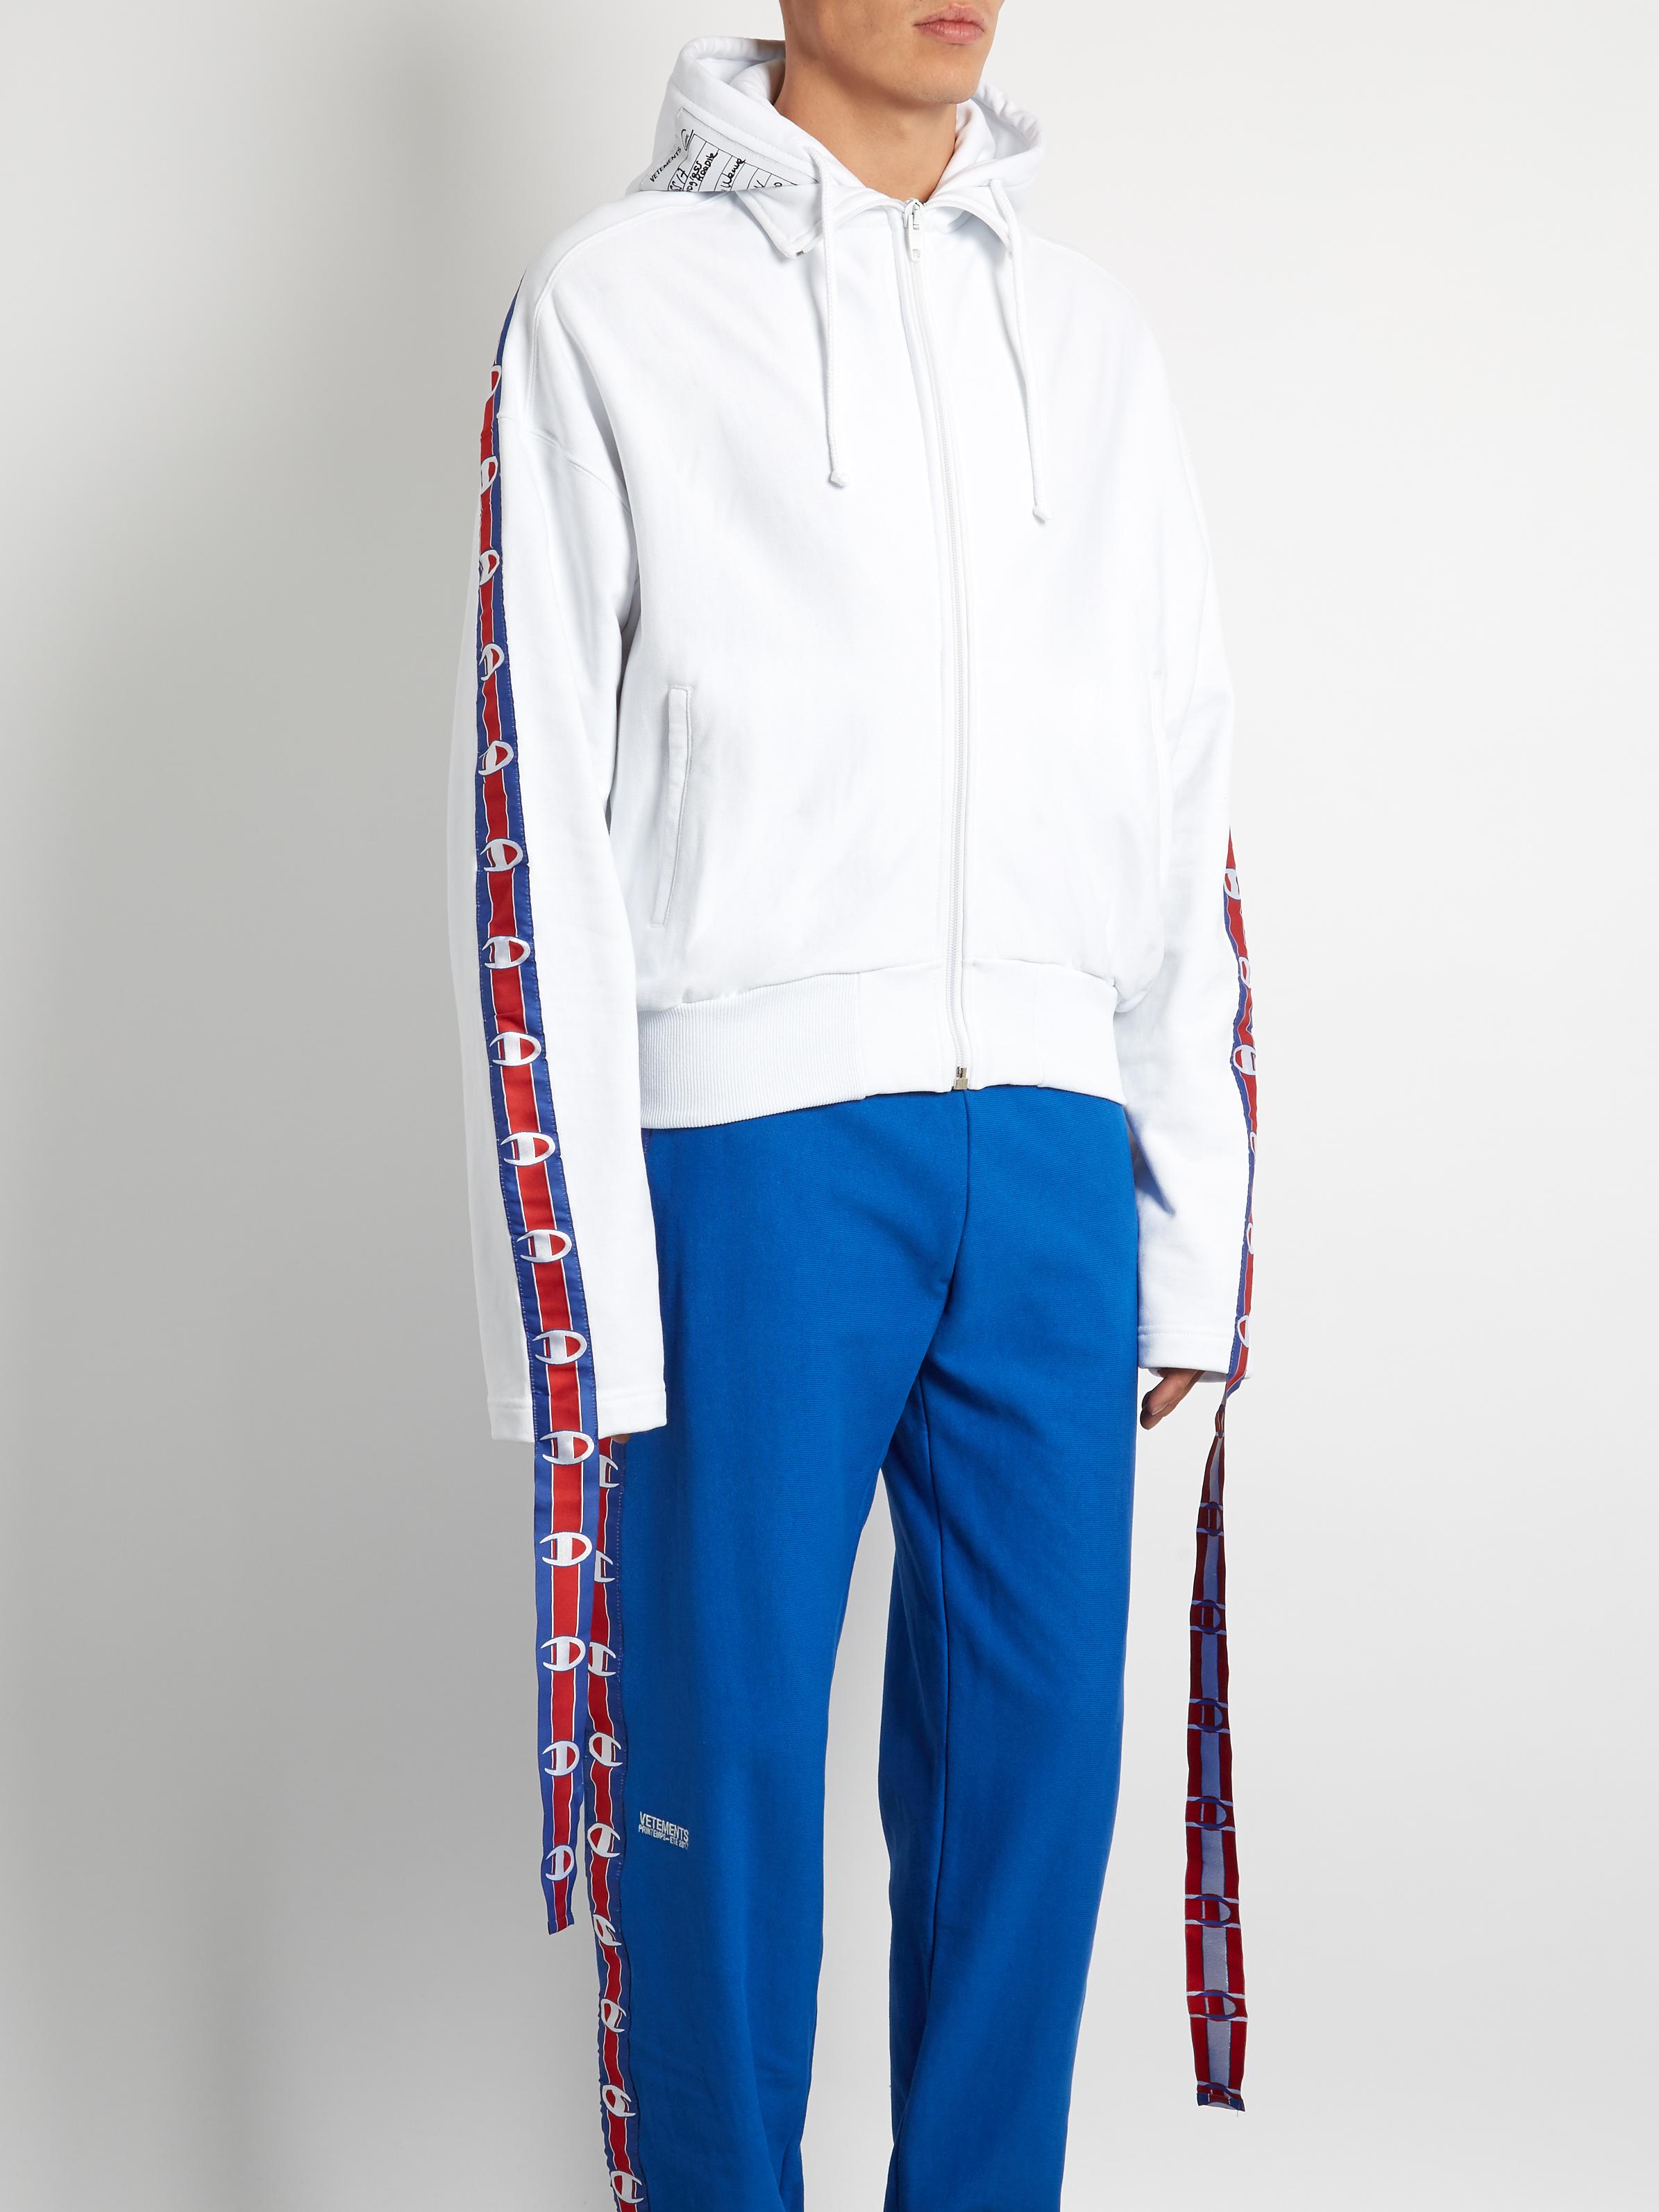 Vetements Cotton X Champion Hooded Sweatshirt in White for Men - Lyst